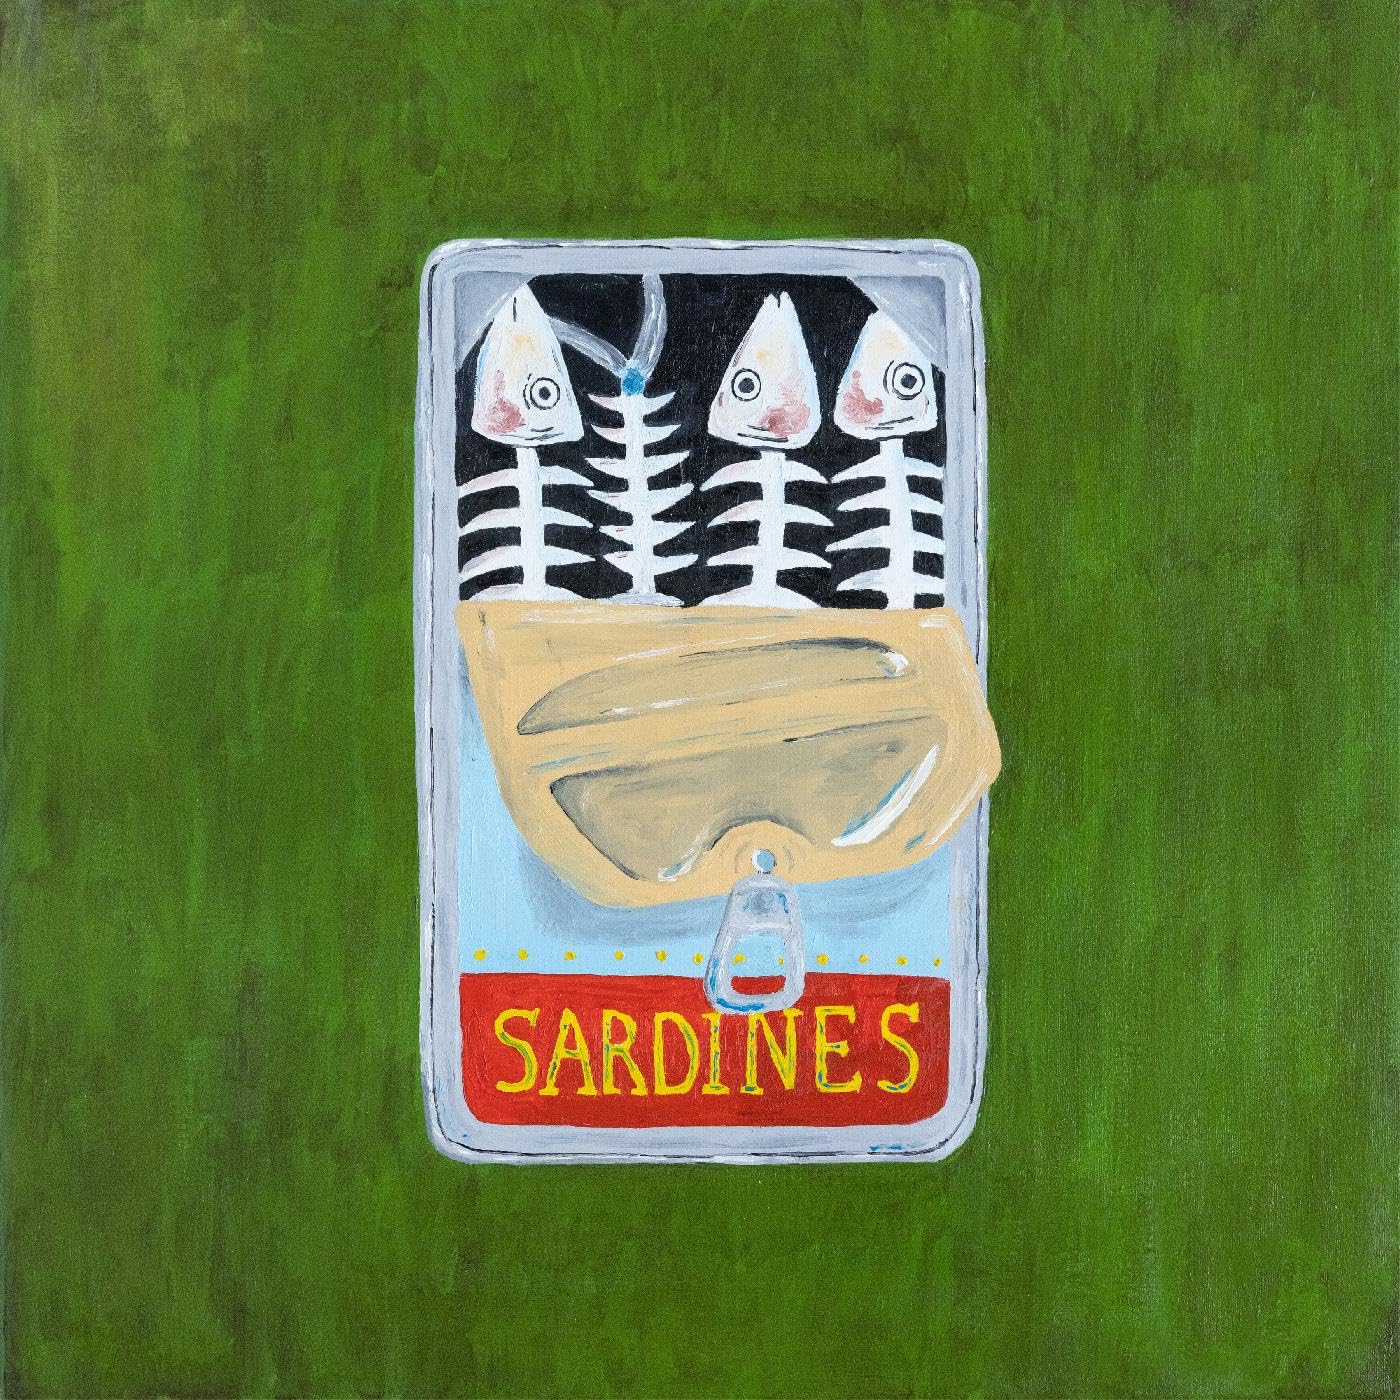 SARDINES (- 2/25)